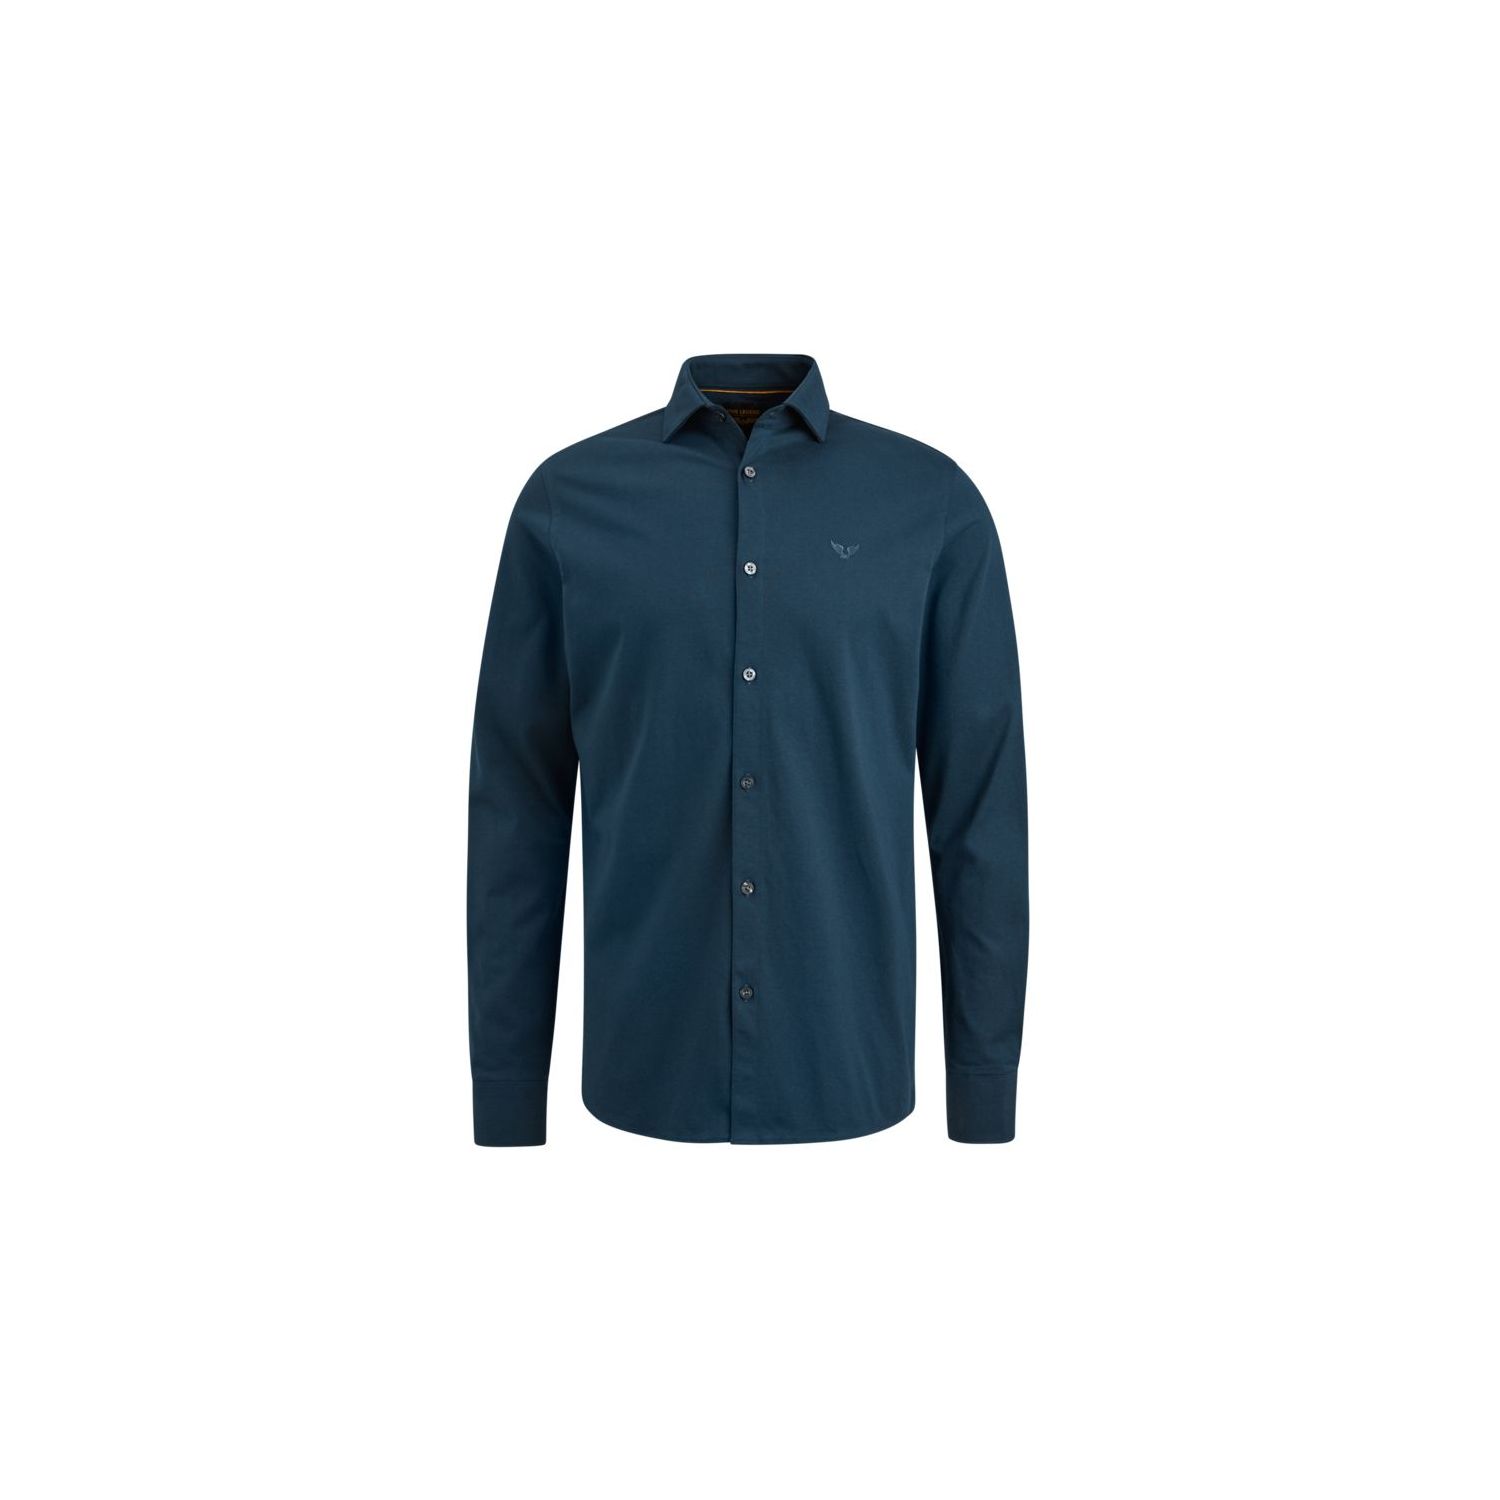 PME Legend l/s shirt single jersey navy blazer